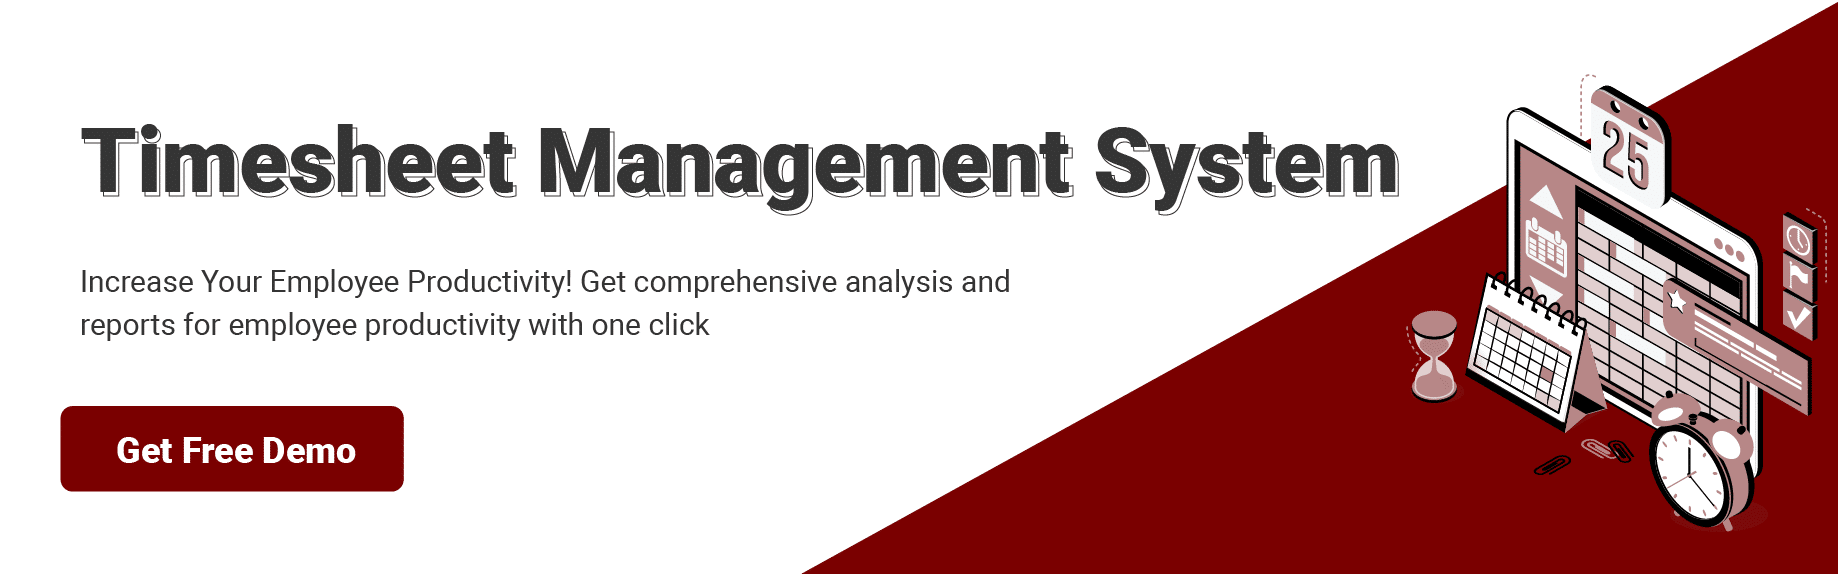 timesheet management system banner